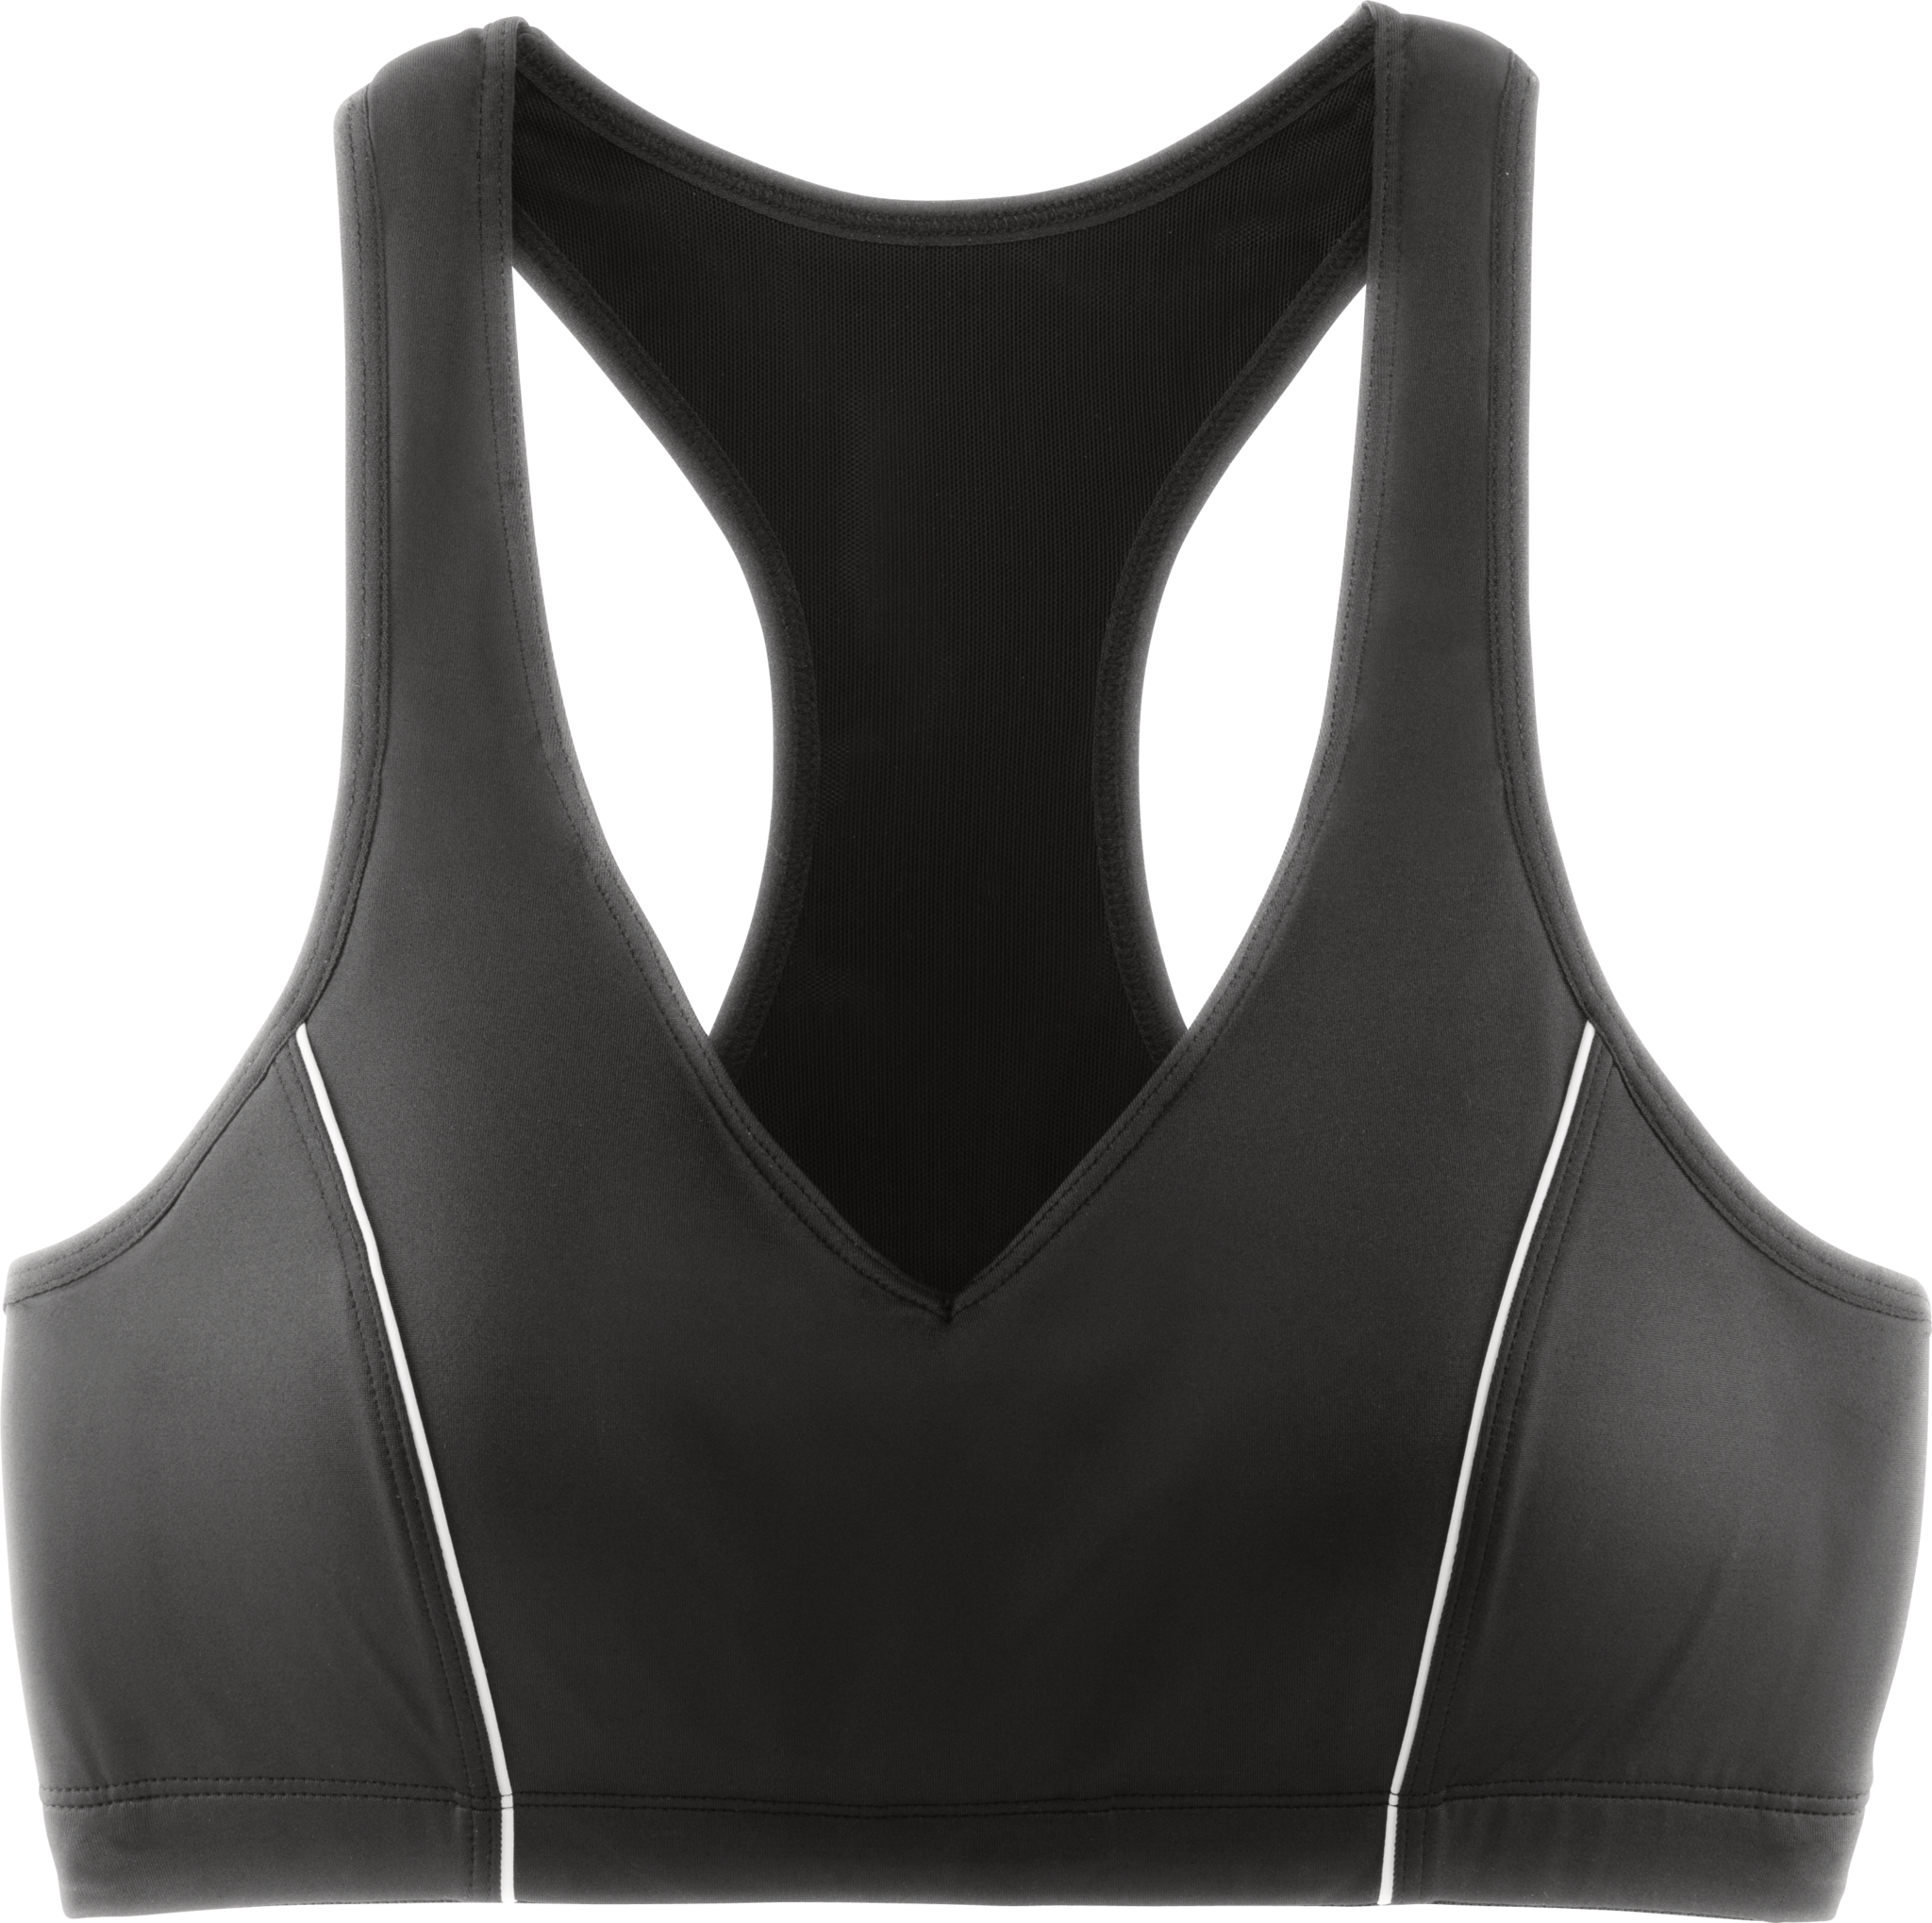 Moving Comfort blue sports bra women's size small (32cd-34c)